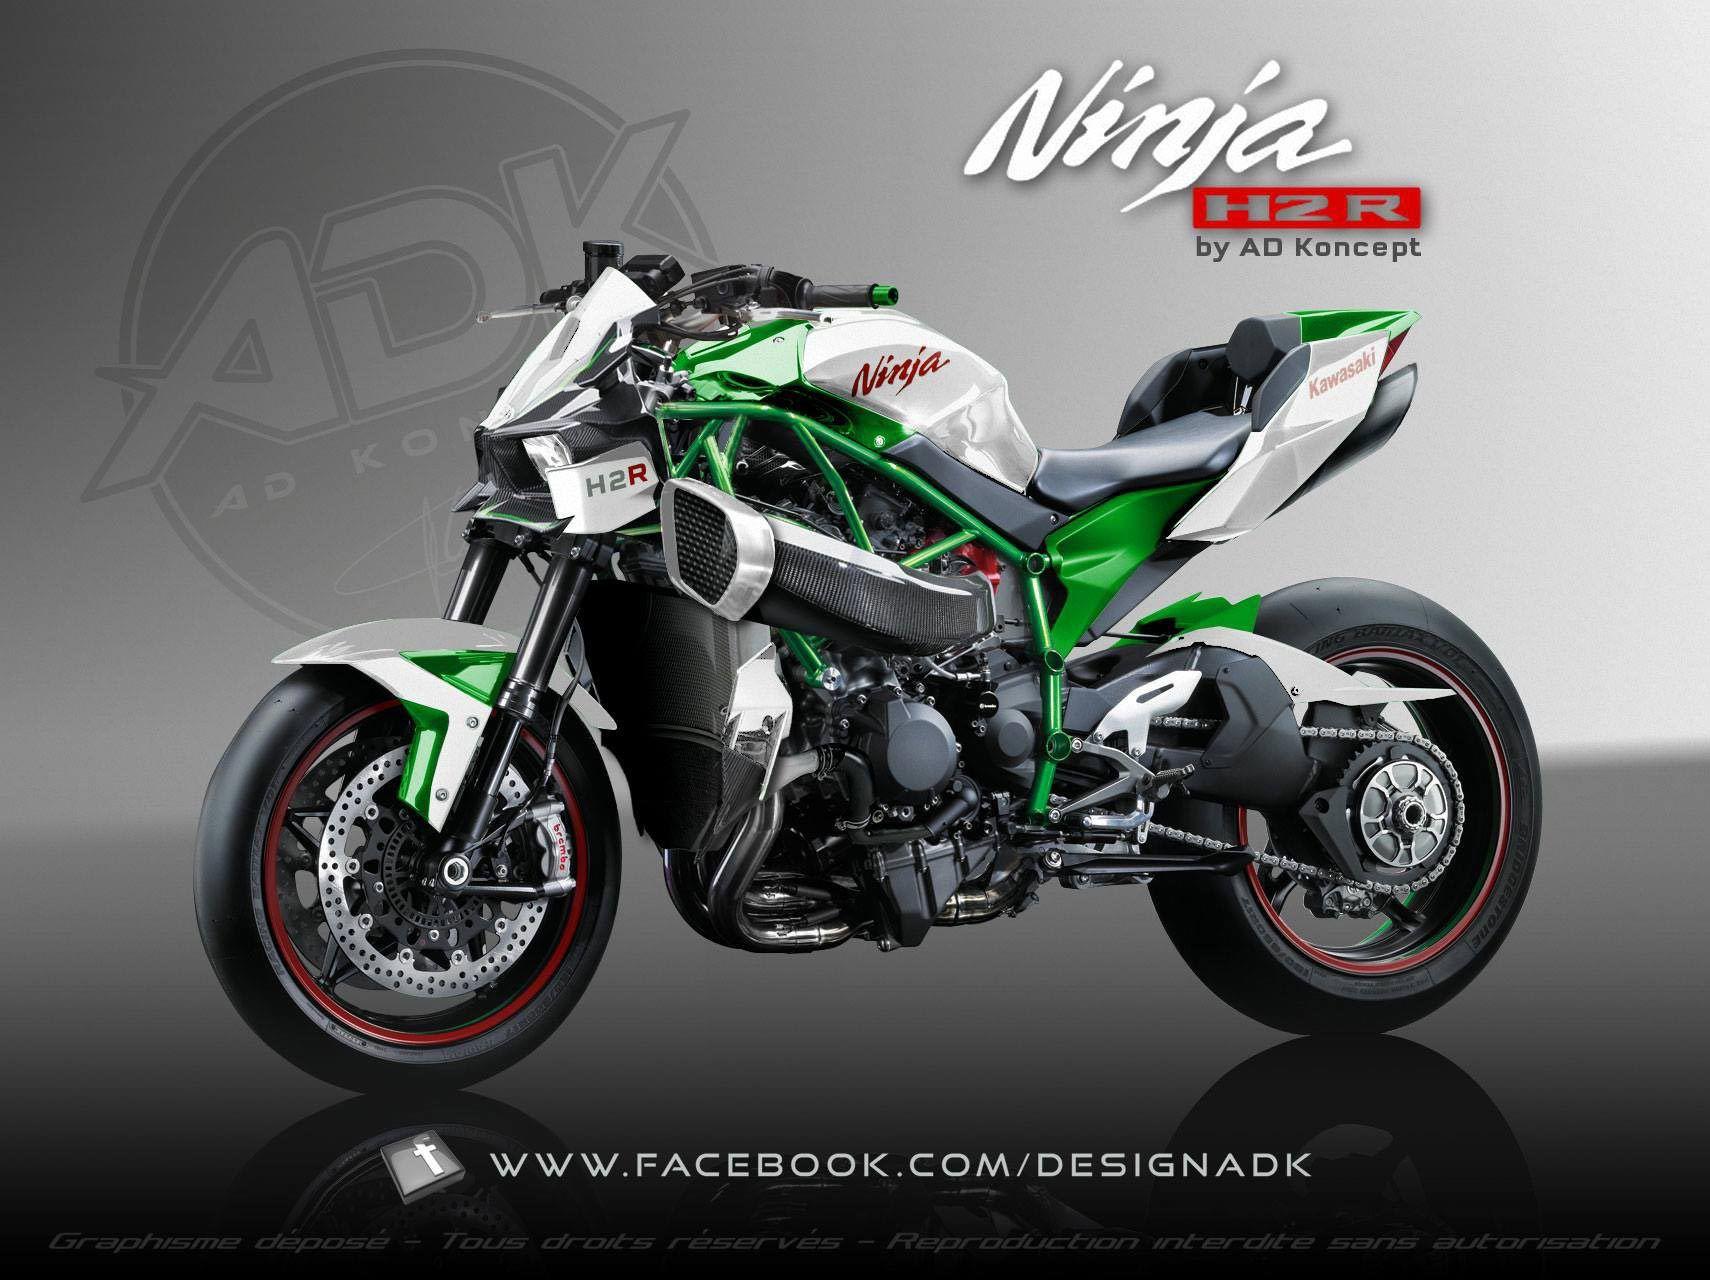 Motorcycle: Kawasaki NINJA H2R Image and amazing Wallpapers